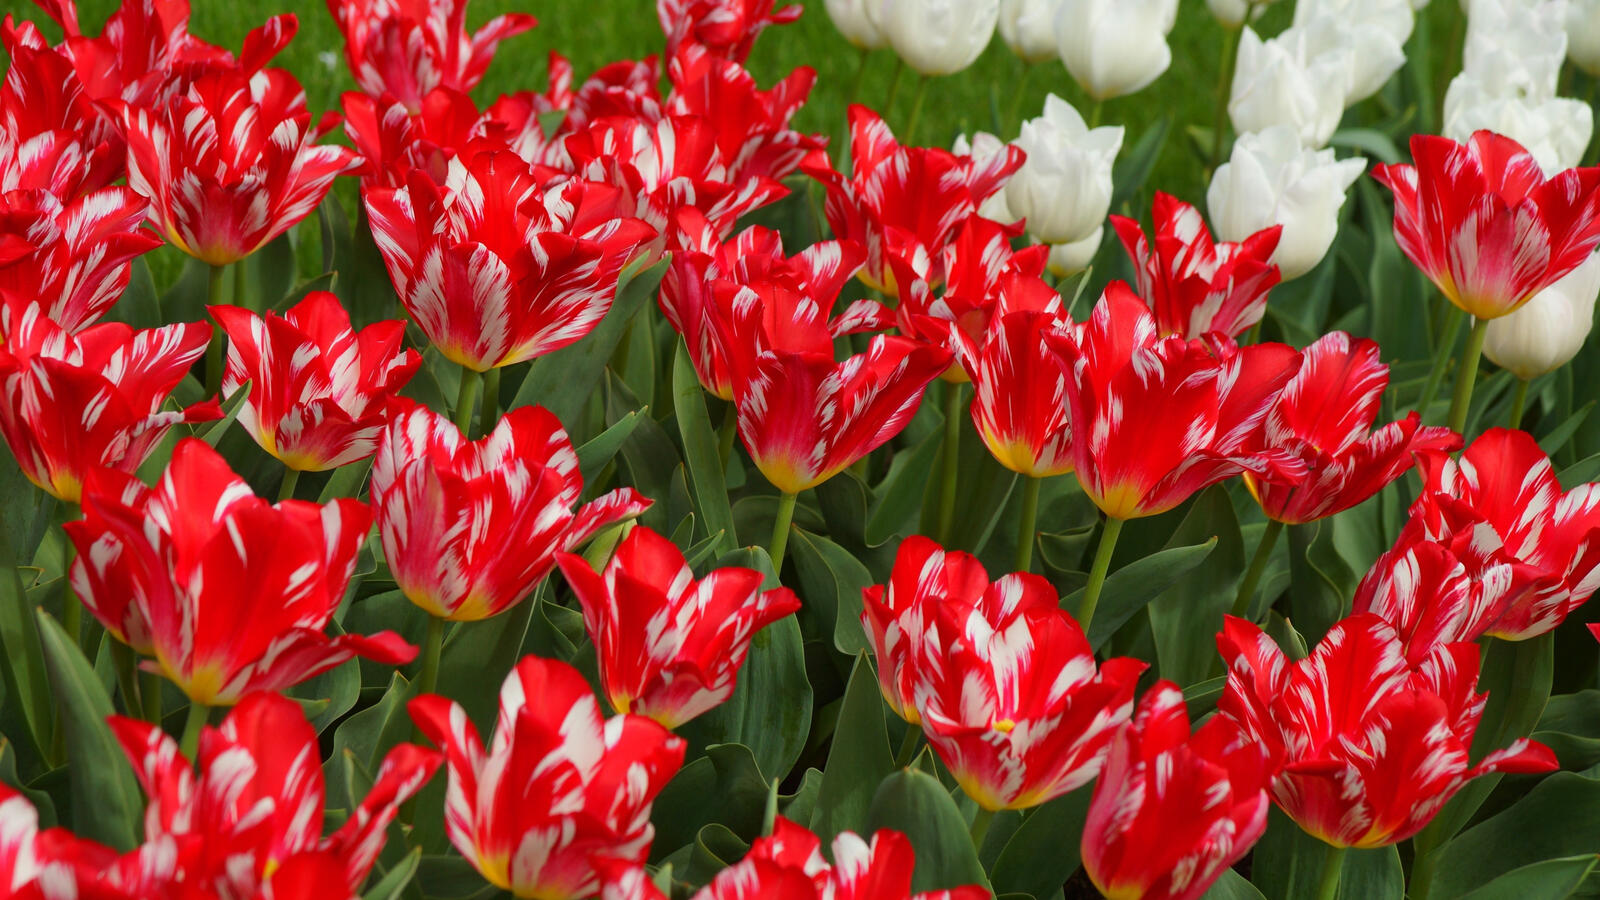 Wallpapers wallpaper red tulips red flowers garden on the desktop